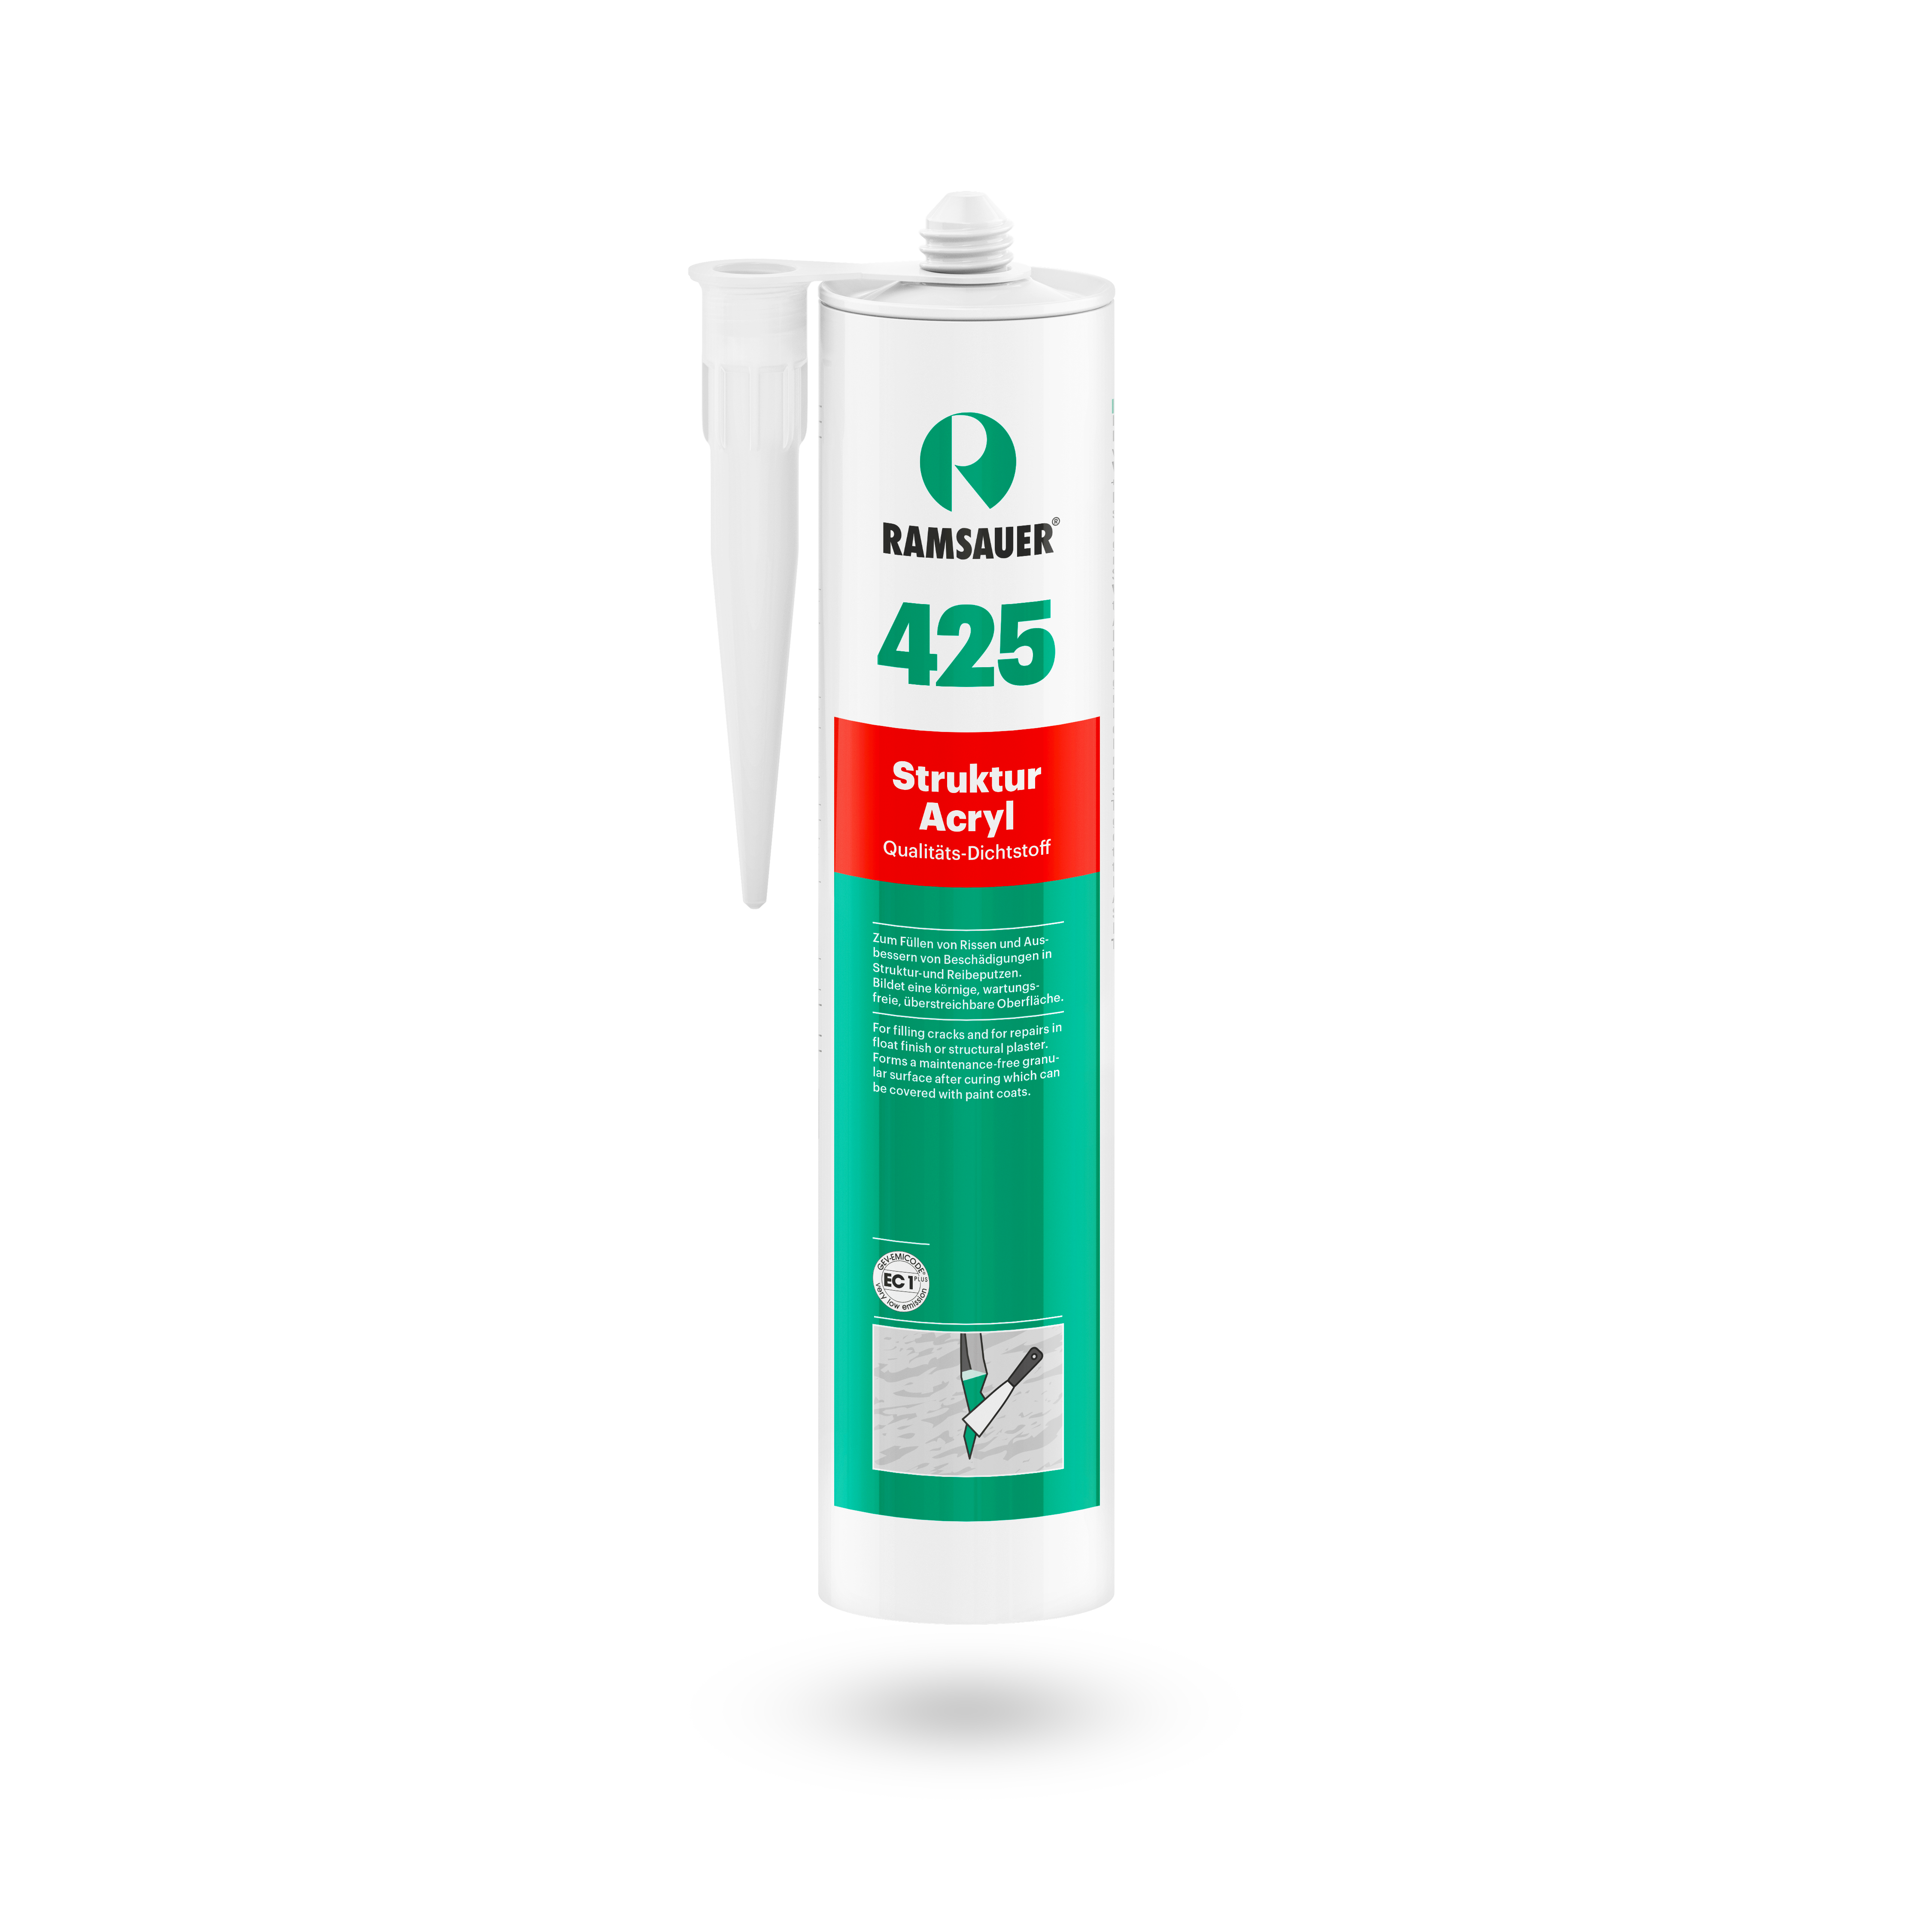 Produktbild 425 Struktur Acryl - Dichtstoffe - Ramsauer